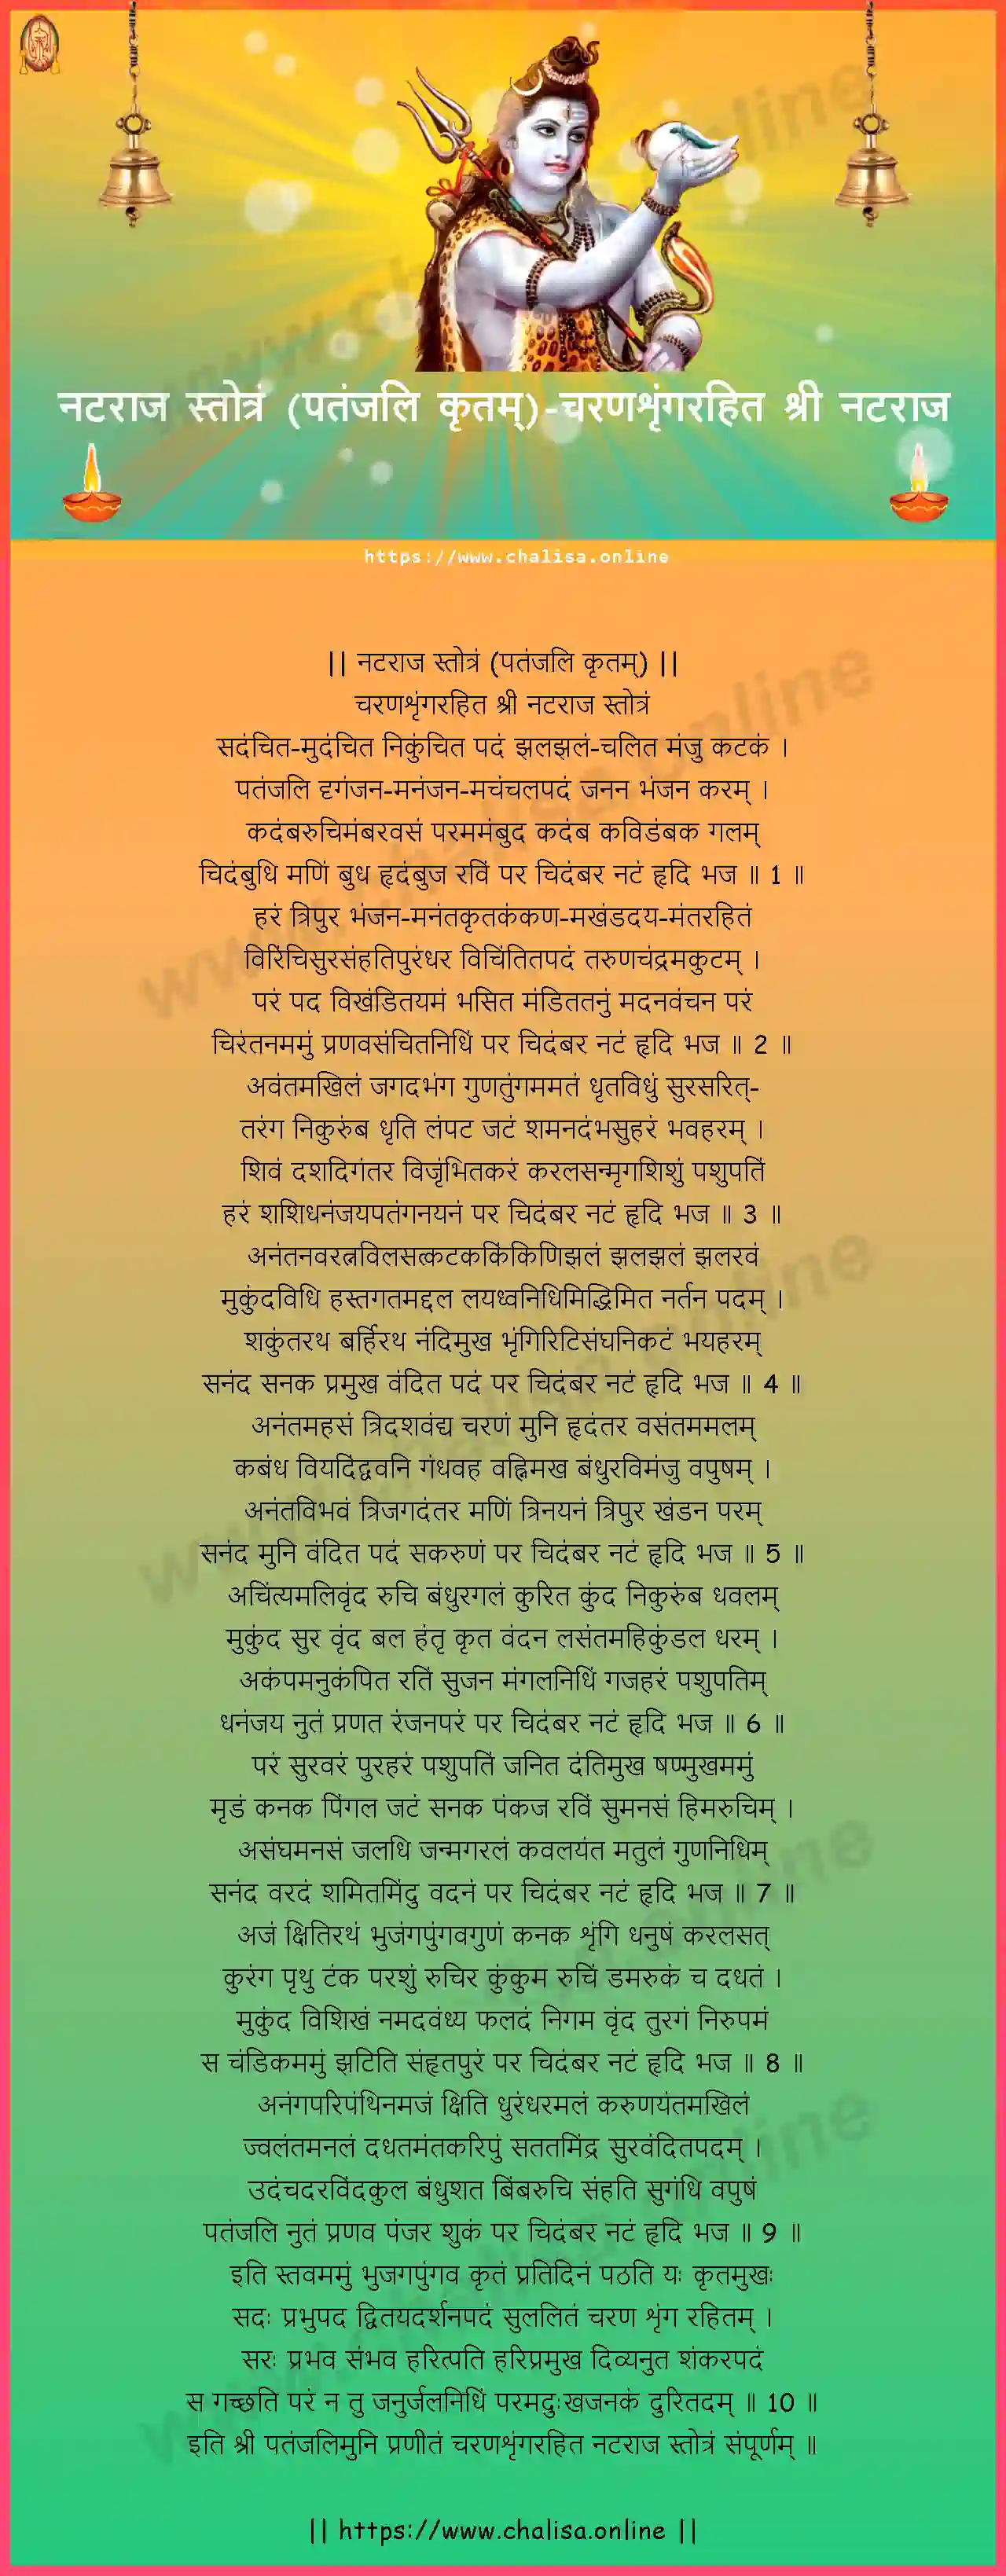 charanasrngarahita-nataraja-stotram-patanjali-krutam-hindi-hindi-lyrics-download